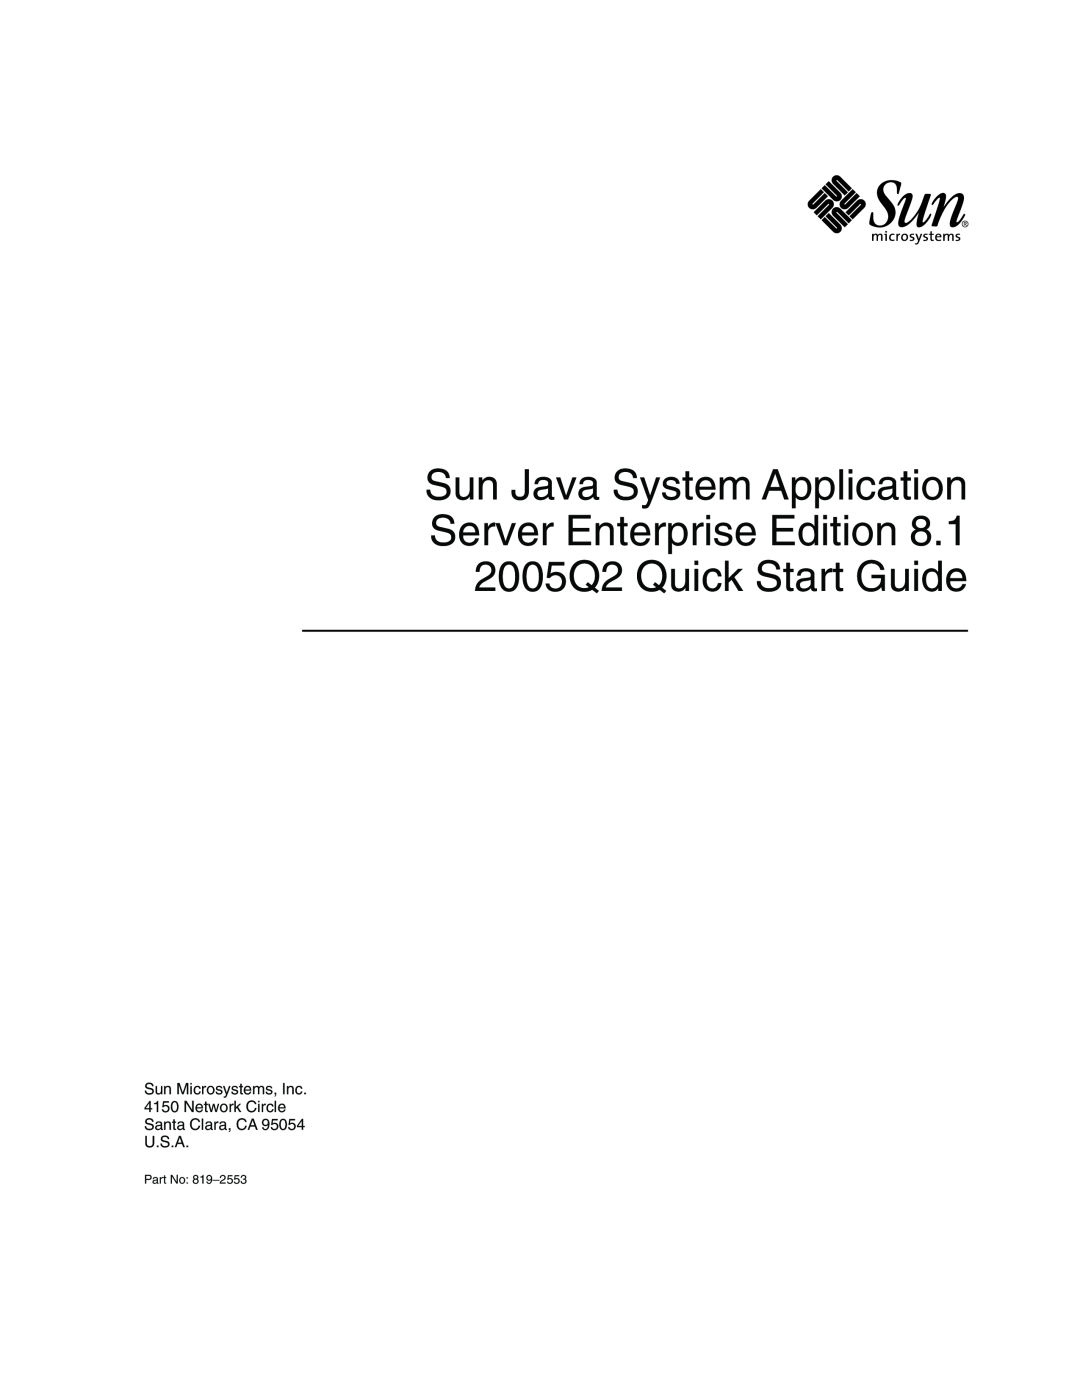 Sun Microsystems quick start Sun Java System Application Server Enterprise Edition, 2005Q2 Quick Start Guide 